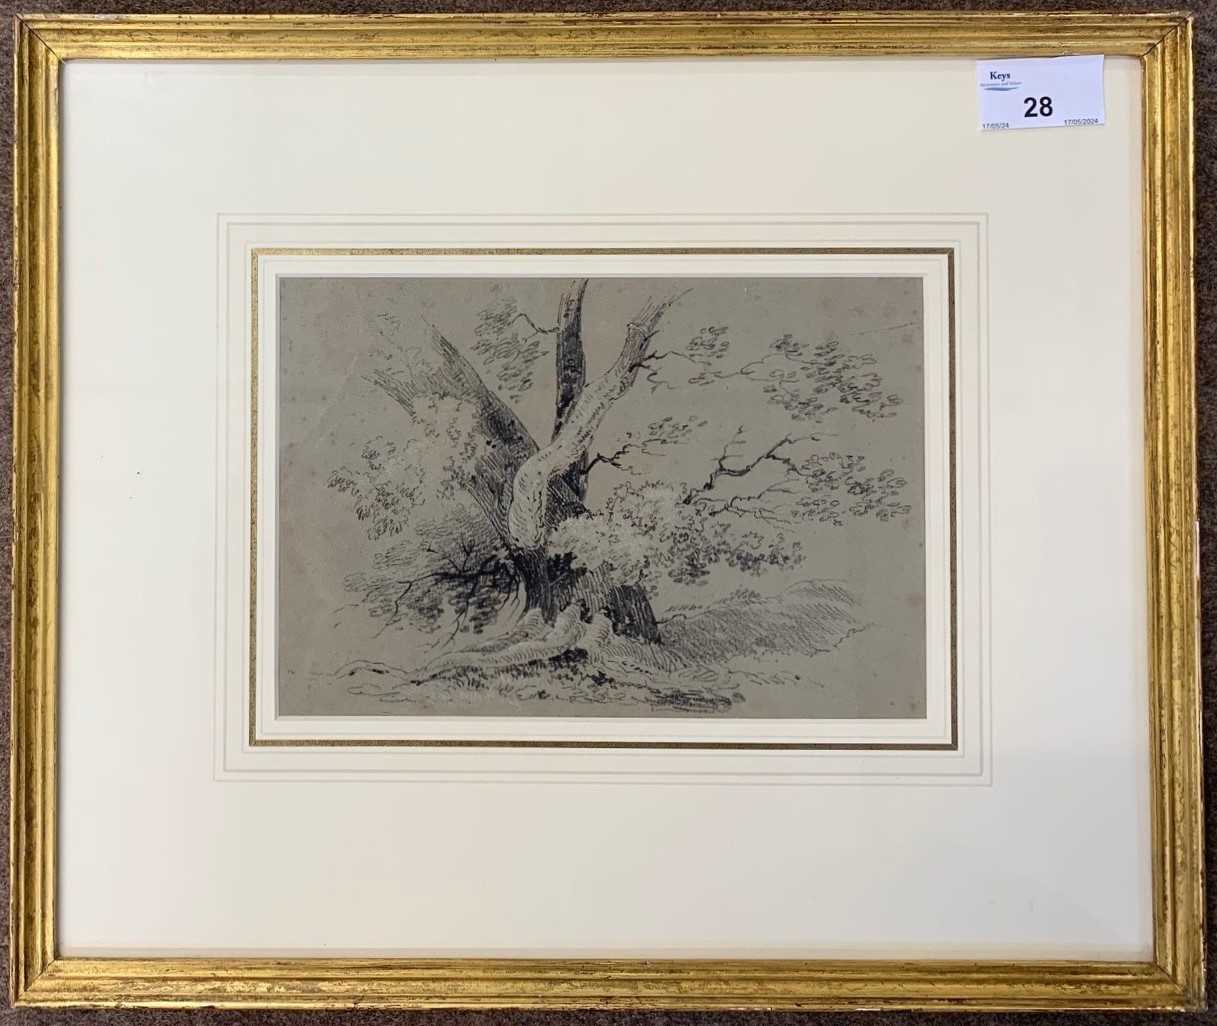 British School, circa 19th century, study of a tree, graphite on paper heightened in white,13x19.